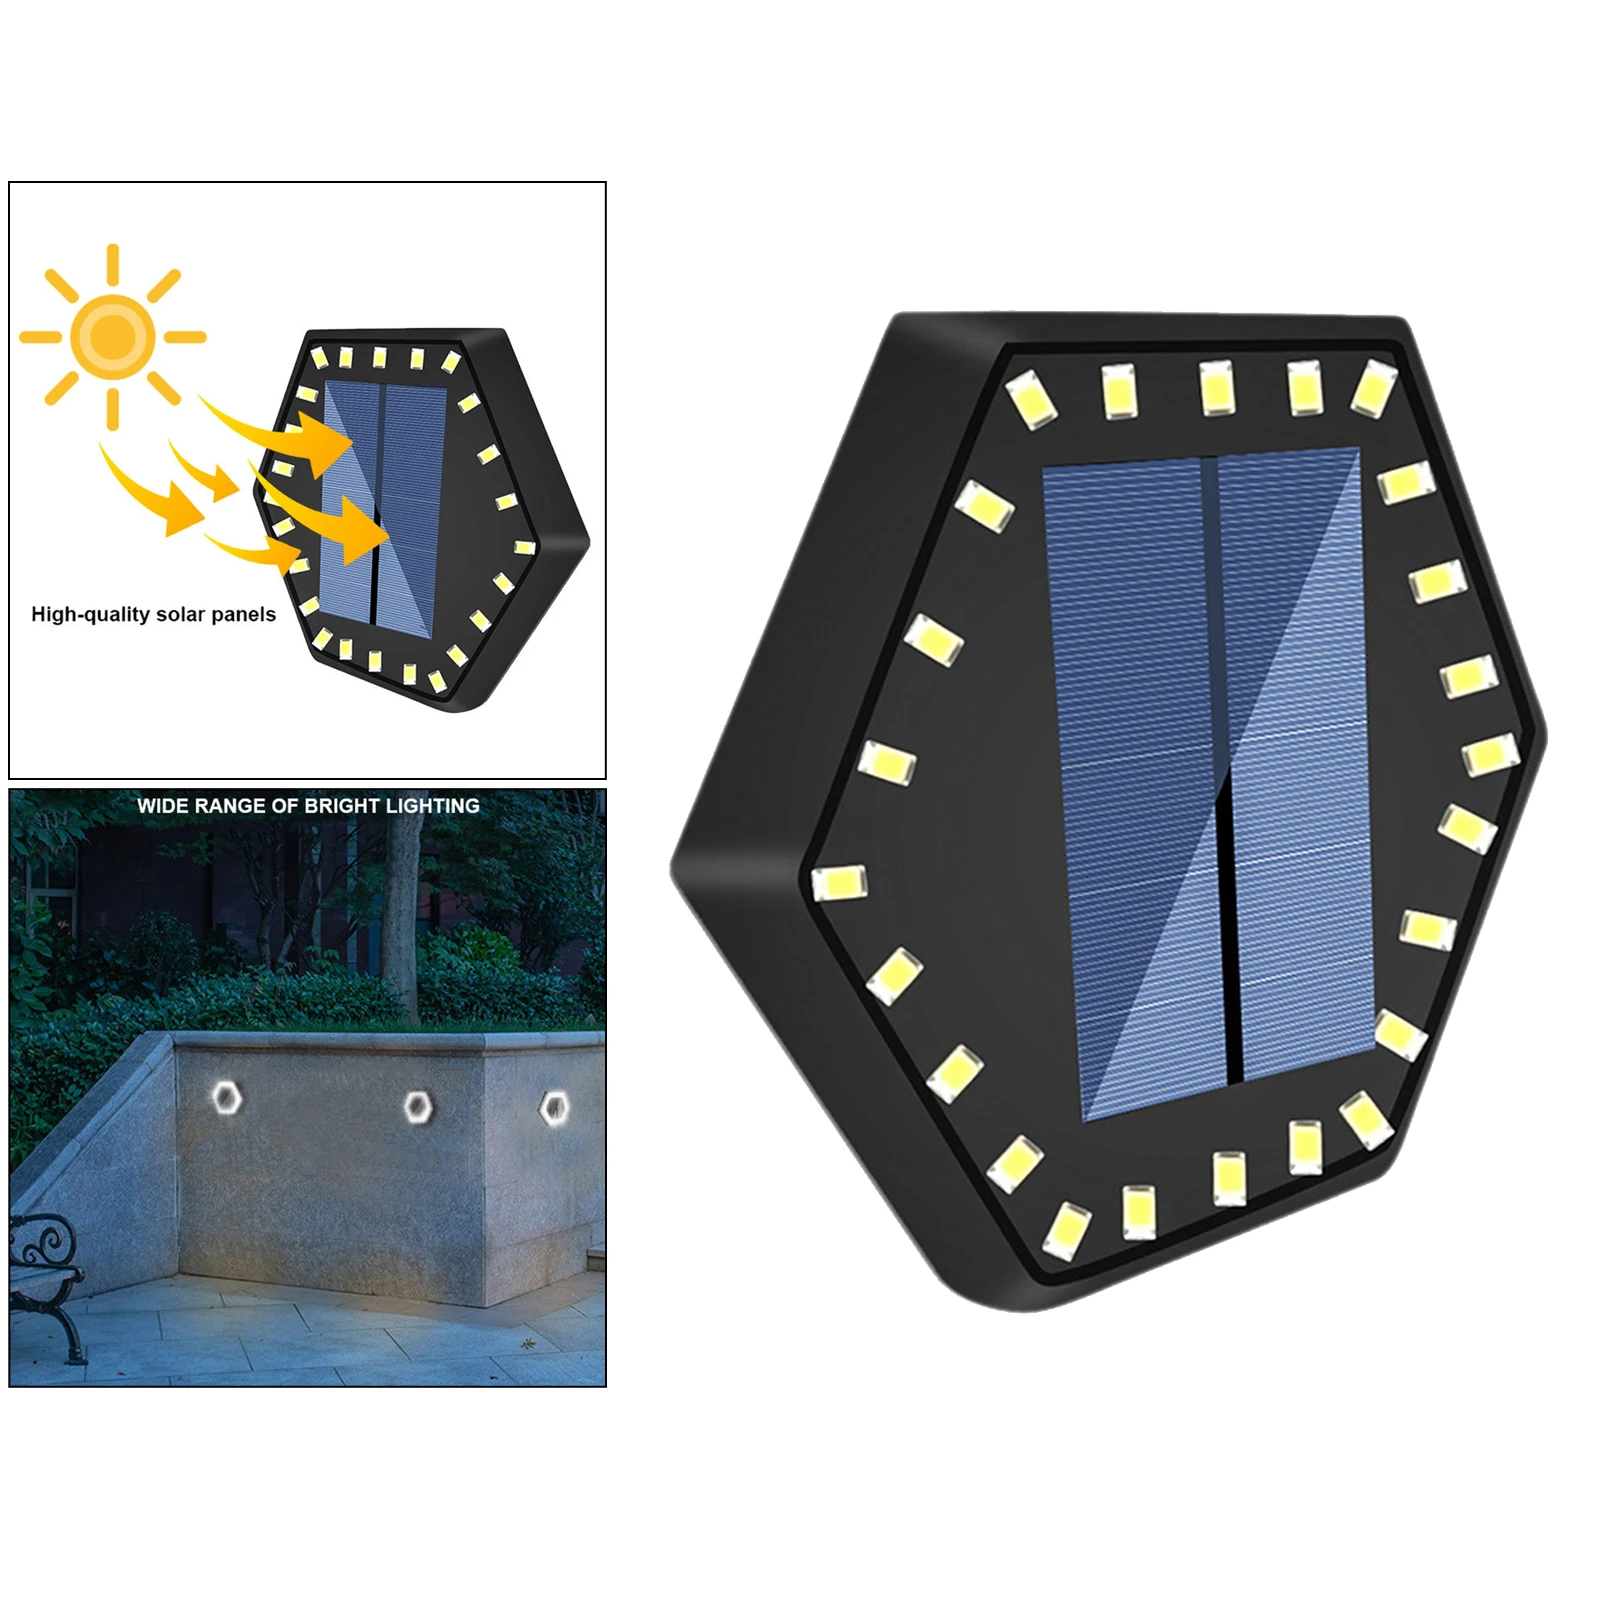 Outdoors Hexagonal LED Solar Powered Garden Ground Light Lighting Waterproof